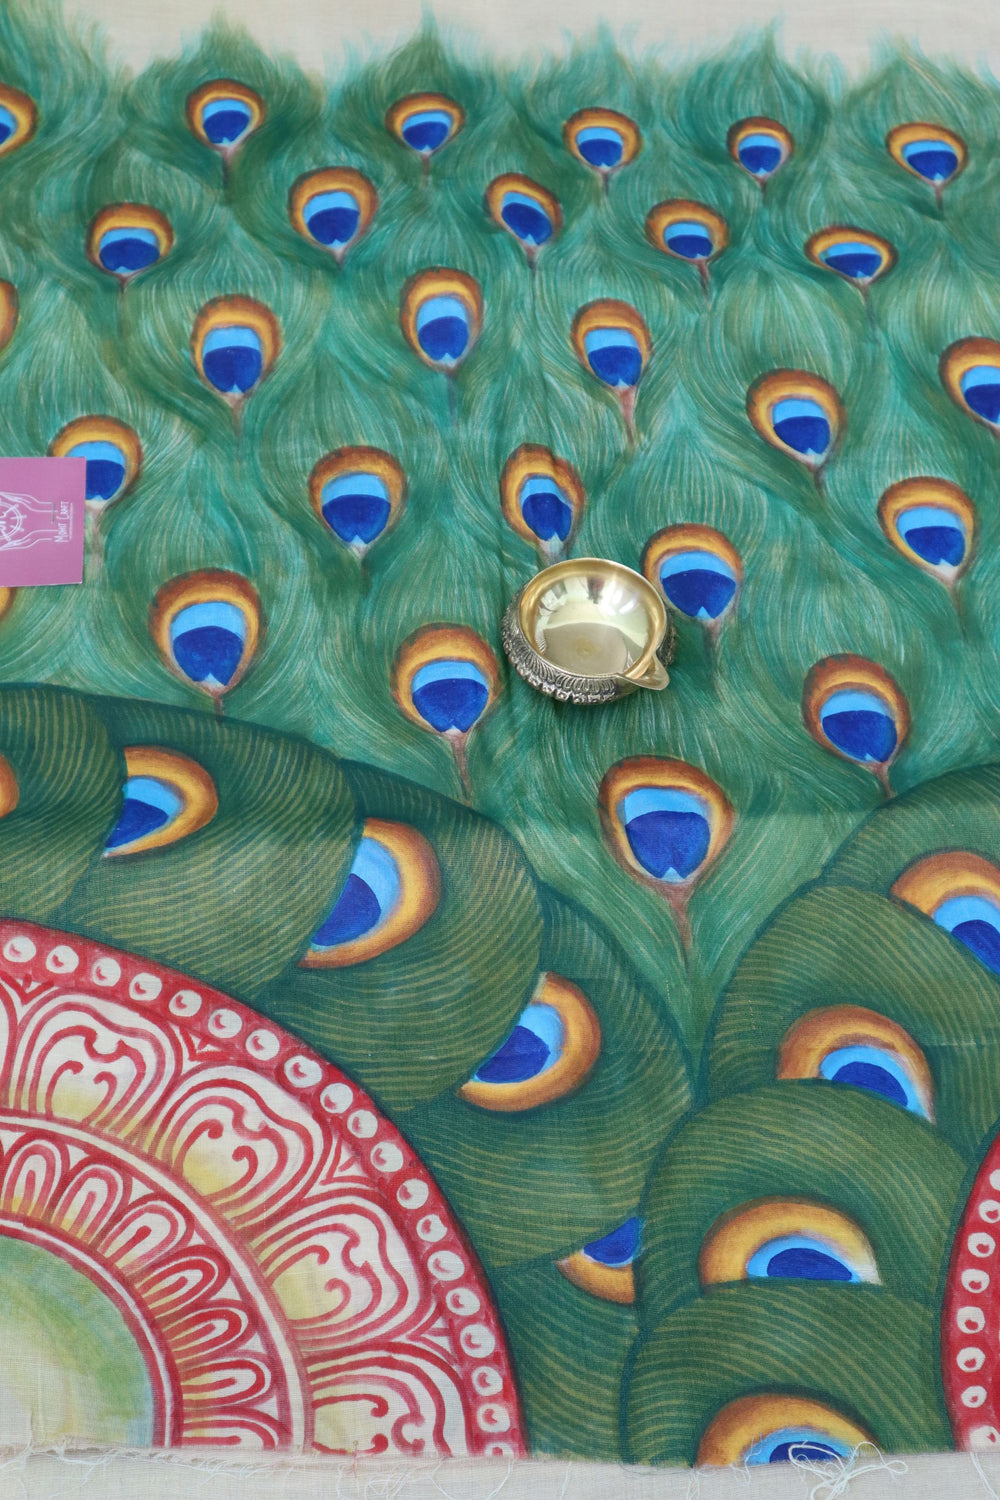  Traditional Kerala Sarees online in the USA |Mural Painted Kerala Saree